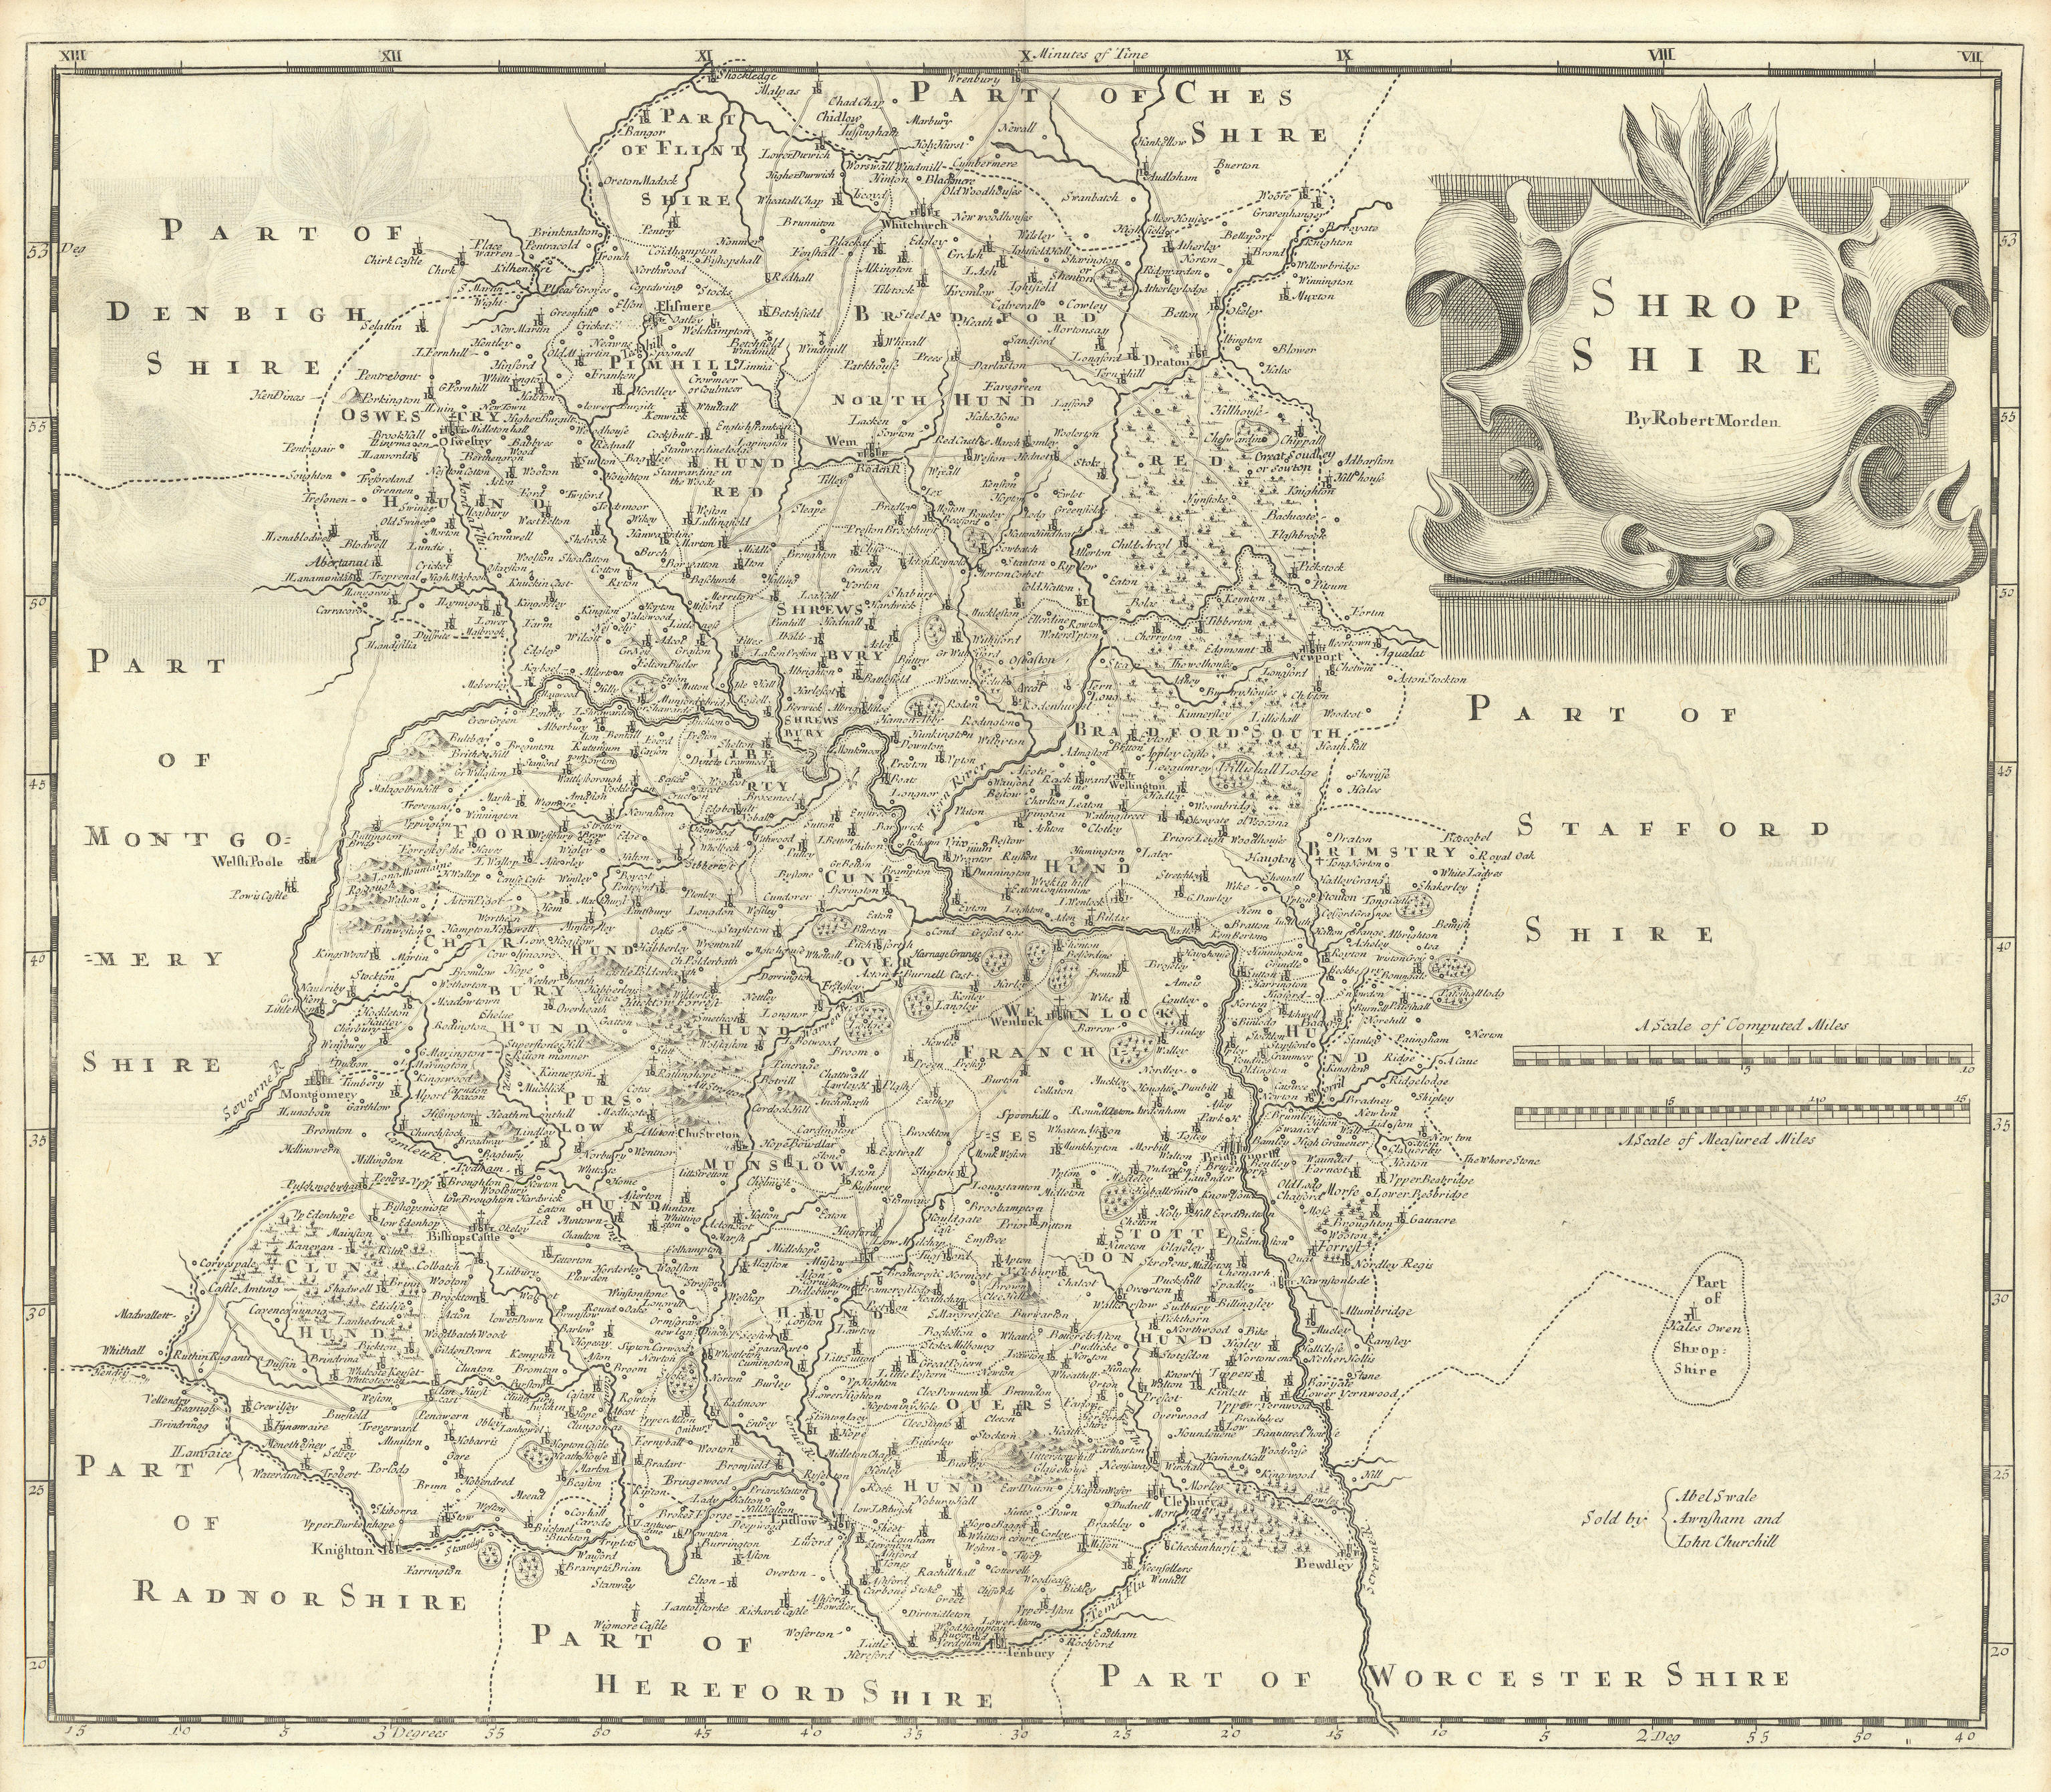 Associate Product Shropshire. 'SHROP SHIRE' by ROBERT MORDEN from Camden's Britannia 1722 map